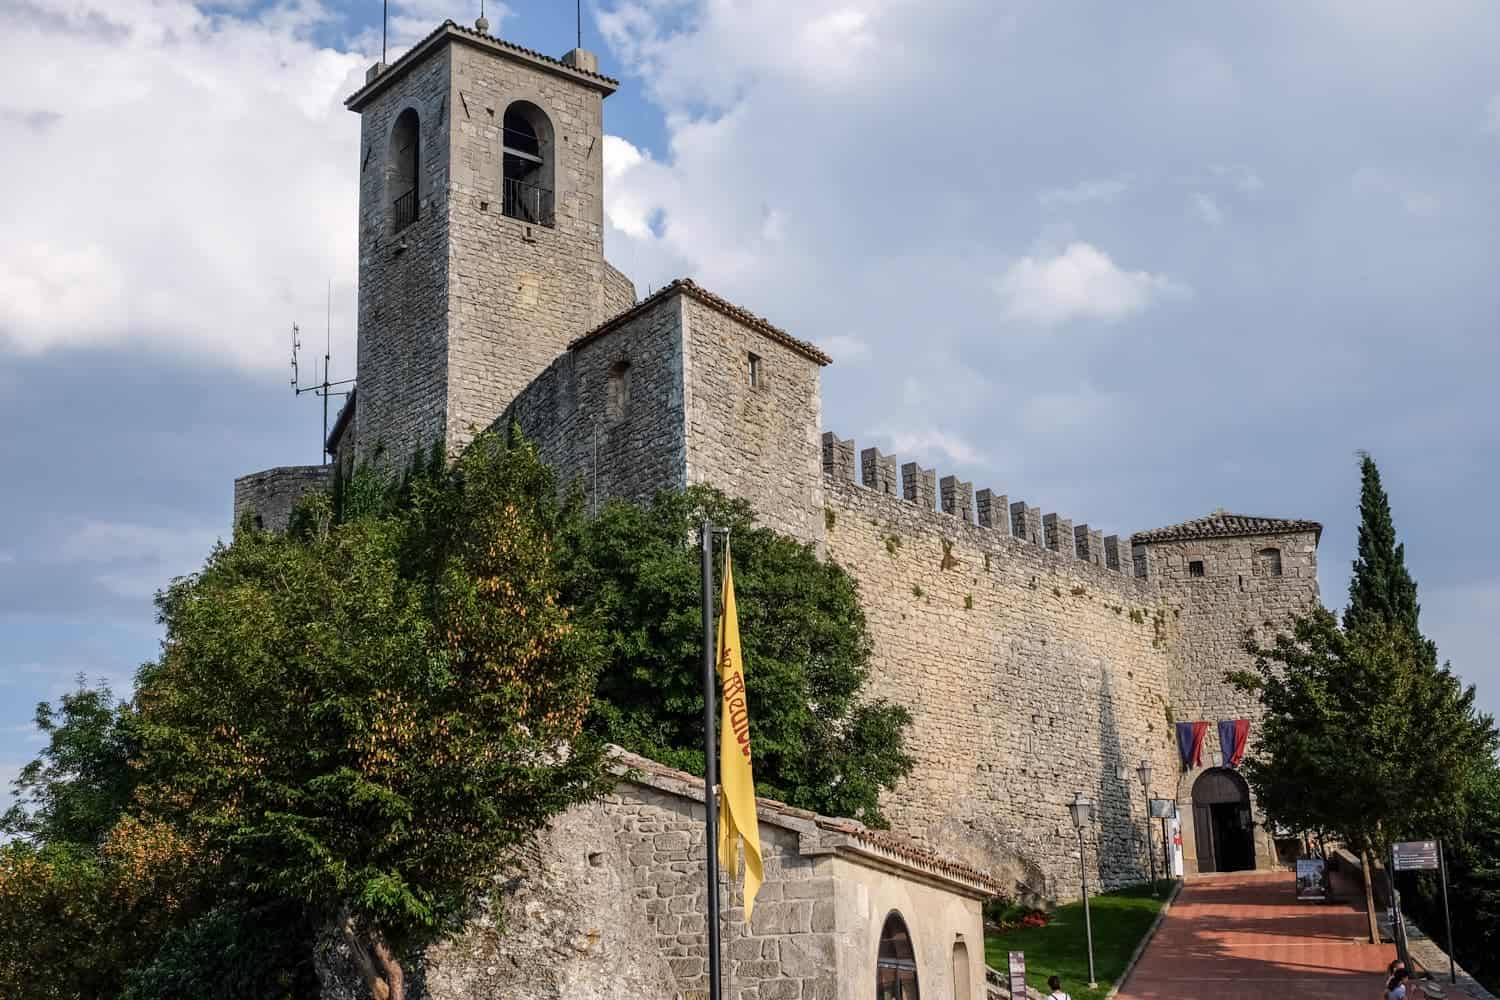 First Tower Guaita in San Marino